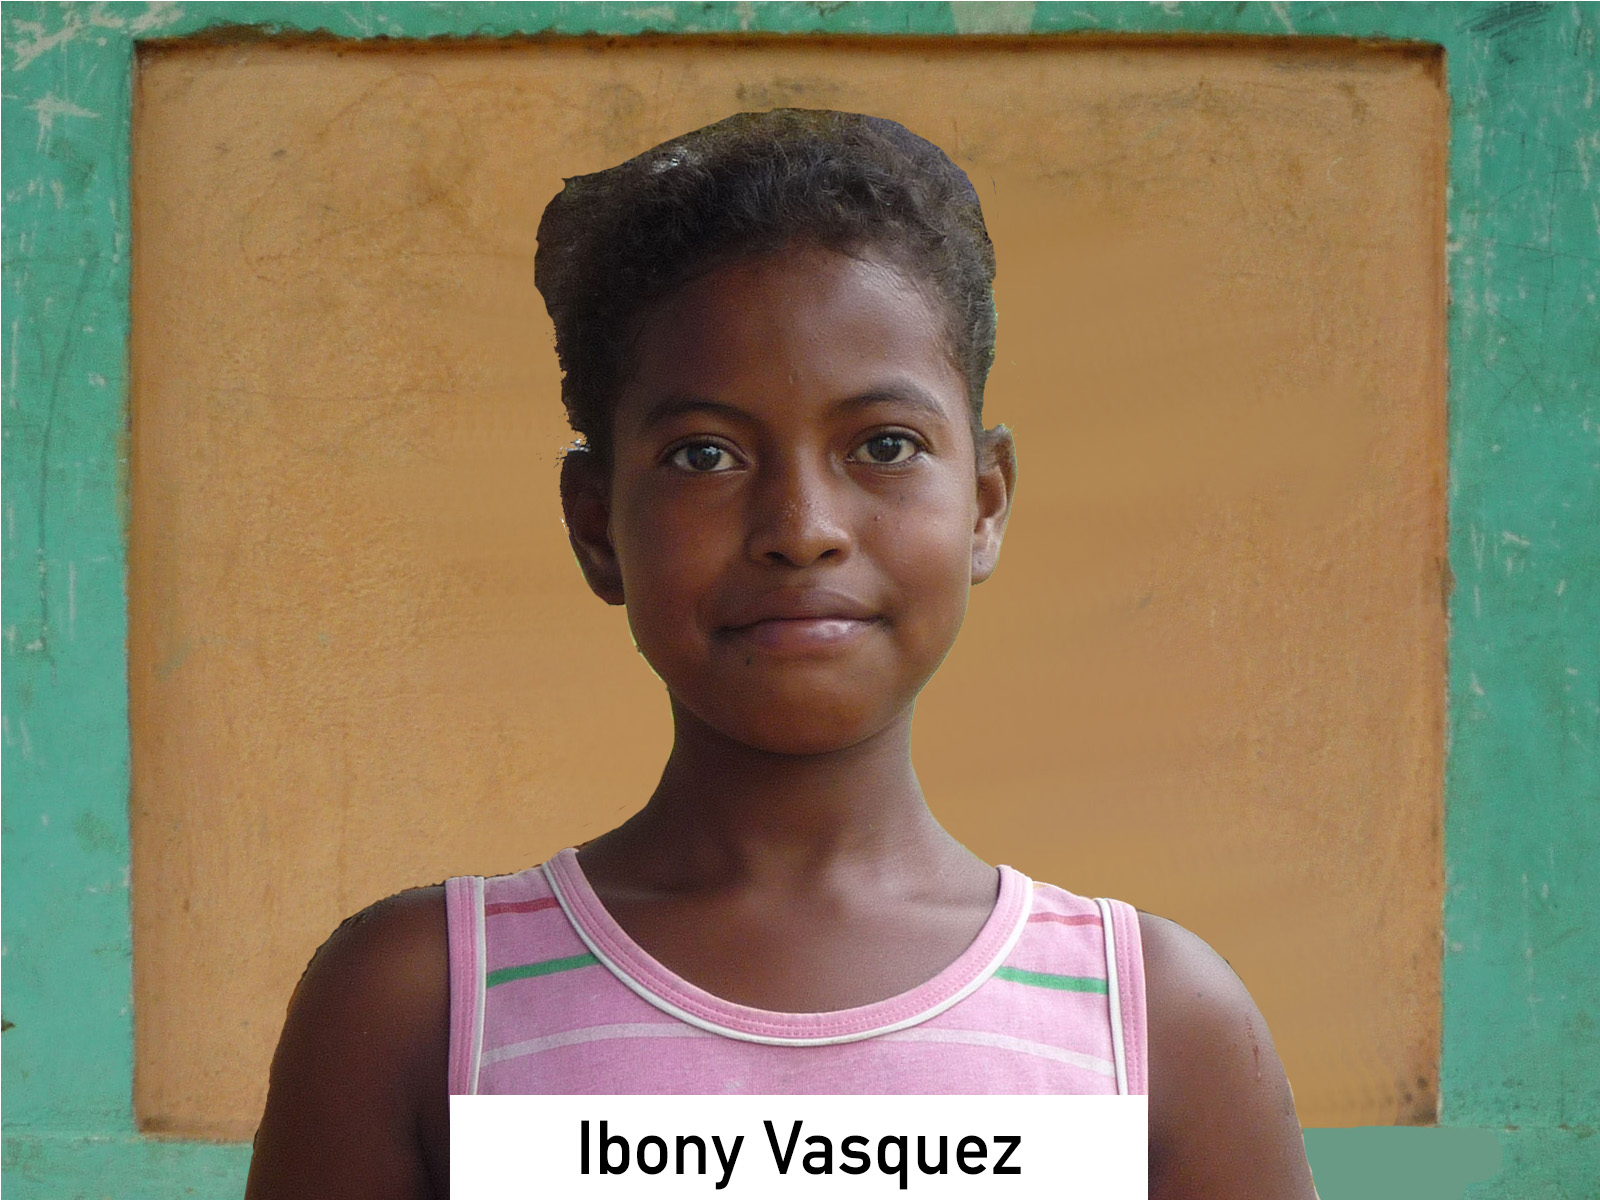 062 - Ibony Vasquez.jpg